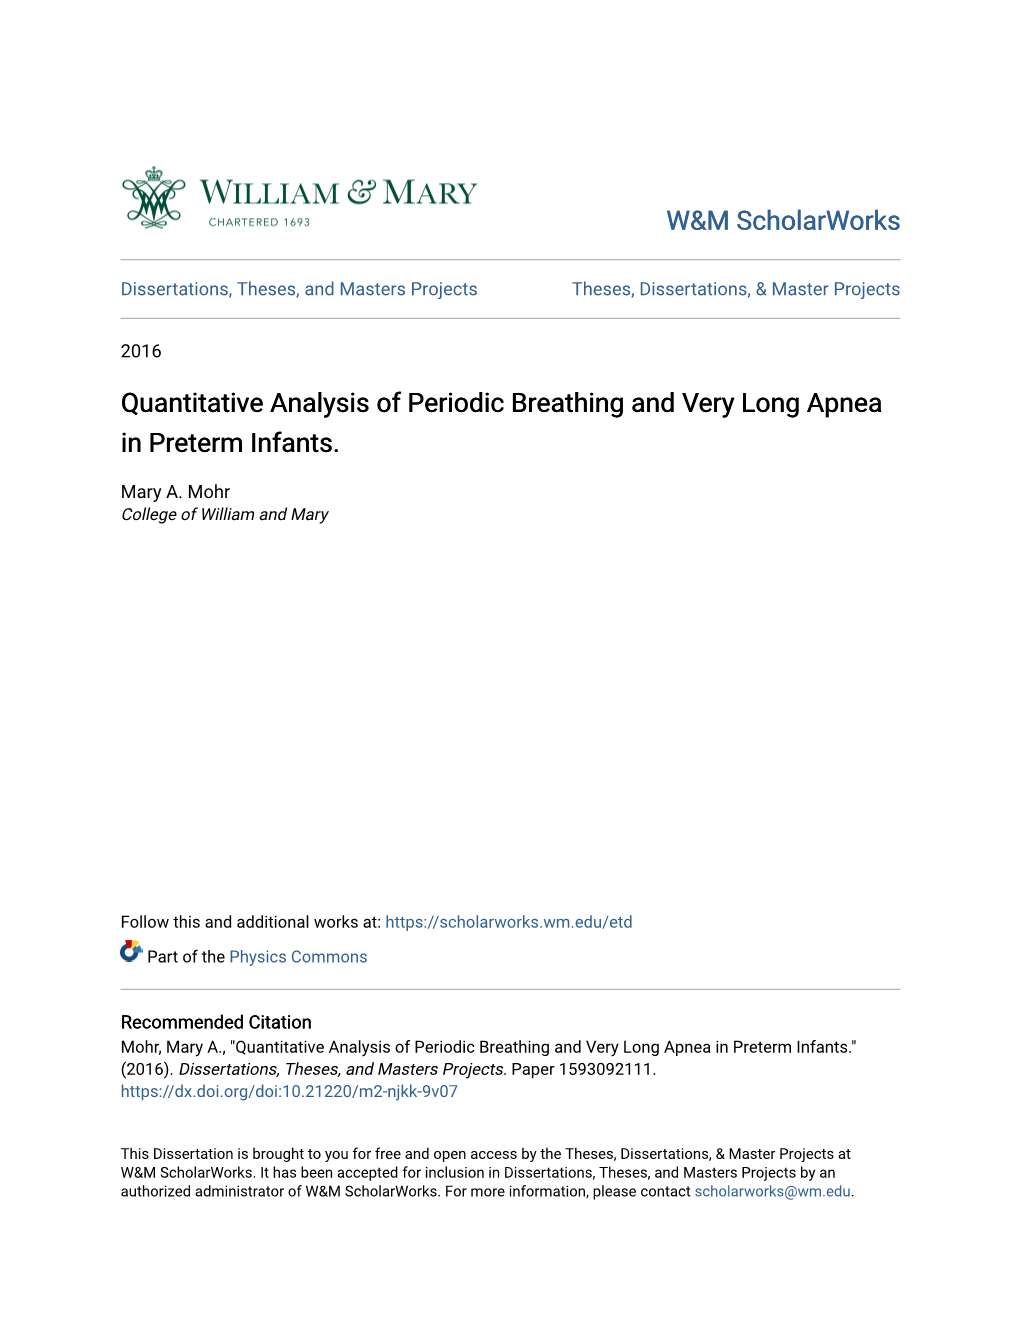 Quantitative Analysis of Periodic Breathing and Very Long Apnea in Preterm Infants